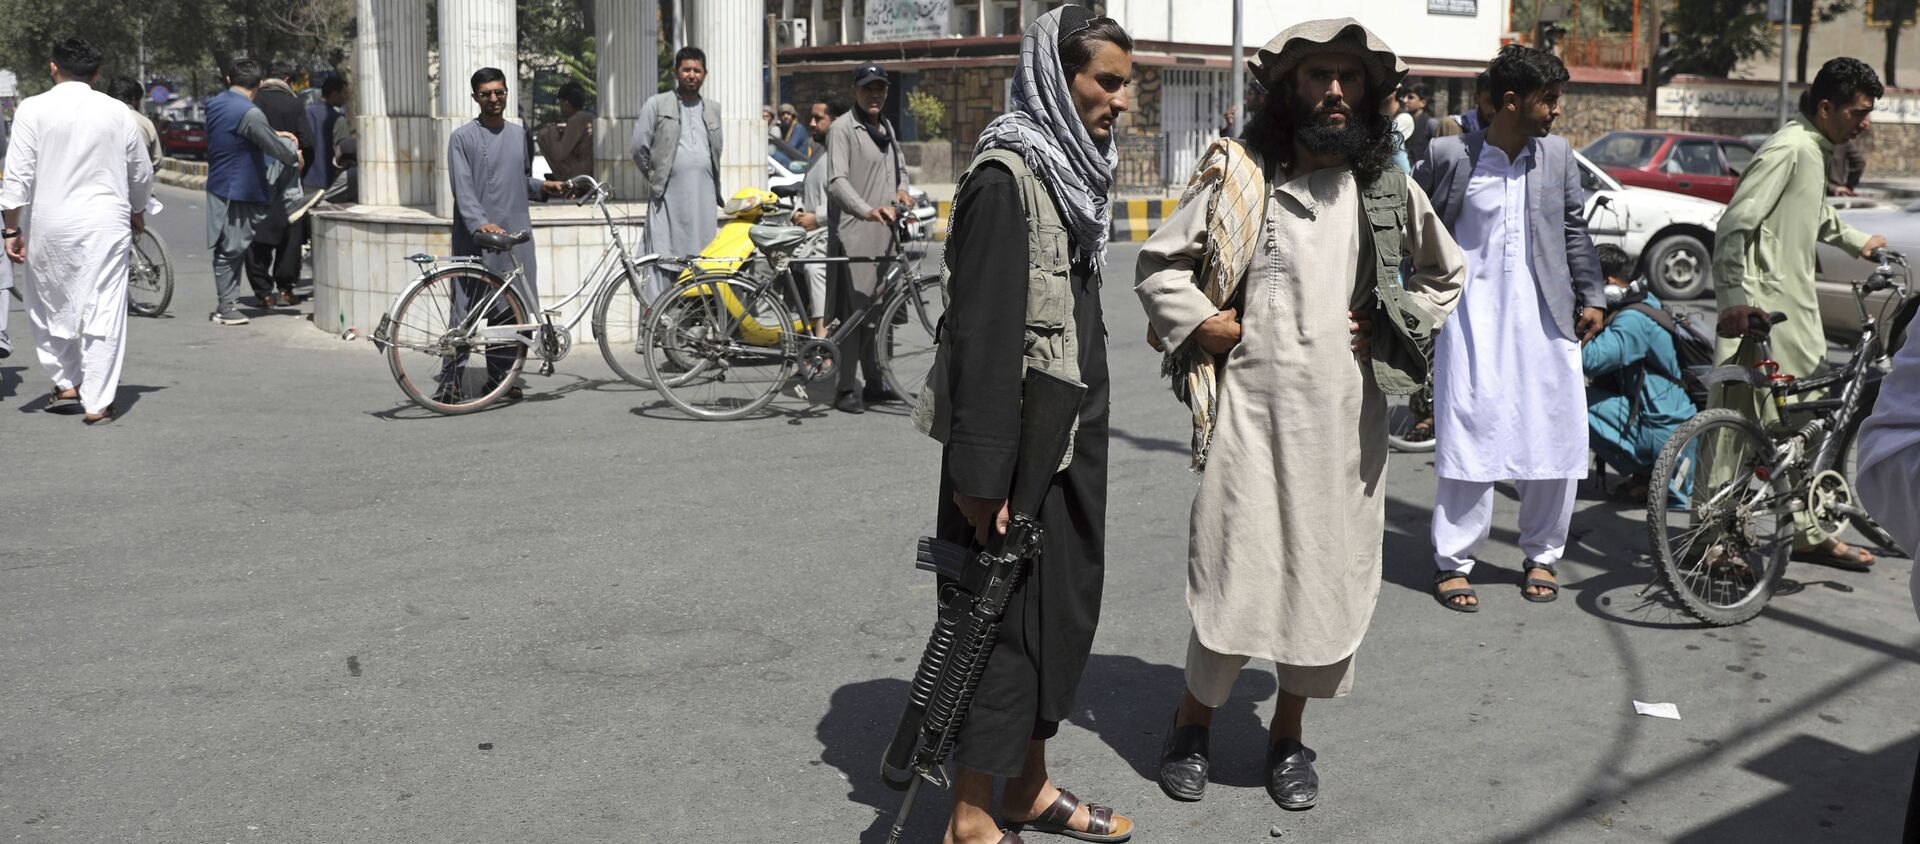 Талибы в Кабуле, Афганистан - Sputnik Грузия, 1920, 17.08.2021